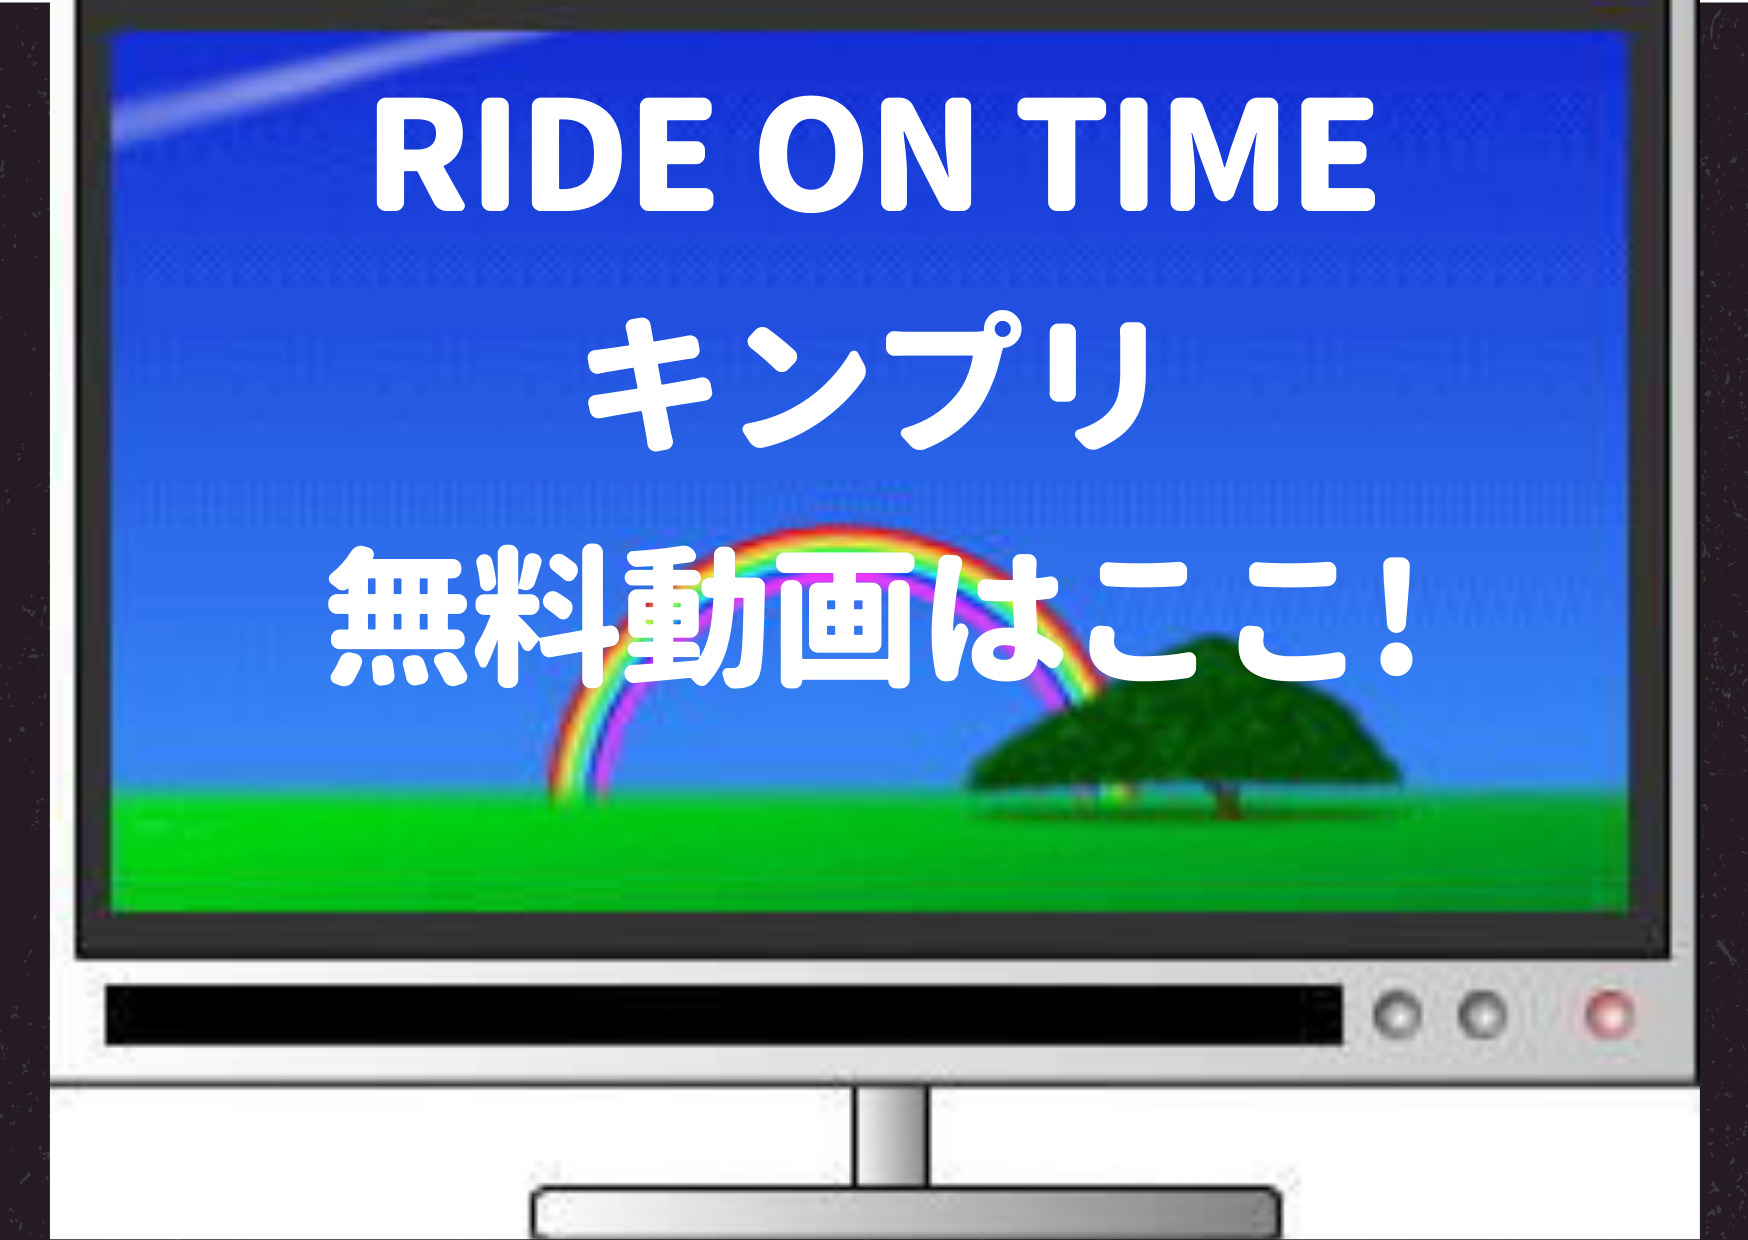 RIDE ON TIME,キンプリ,dailymotion,動画,2018,2019,アマゾンプライム